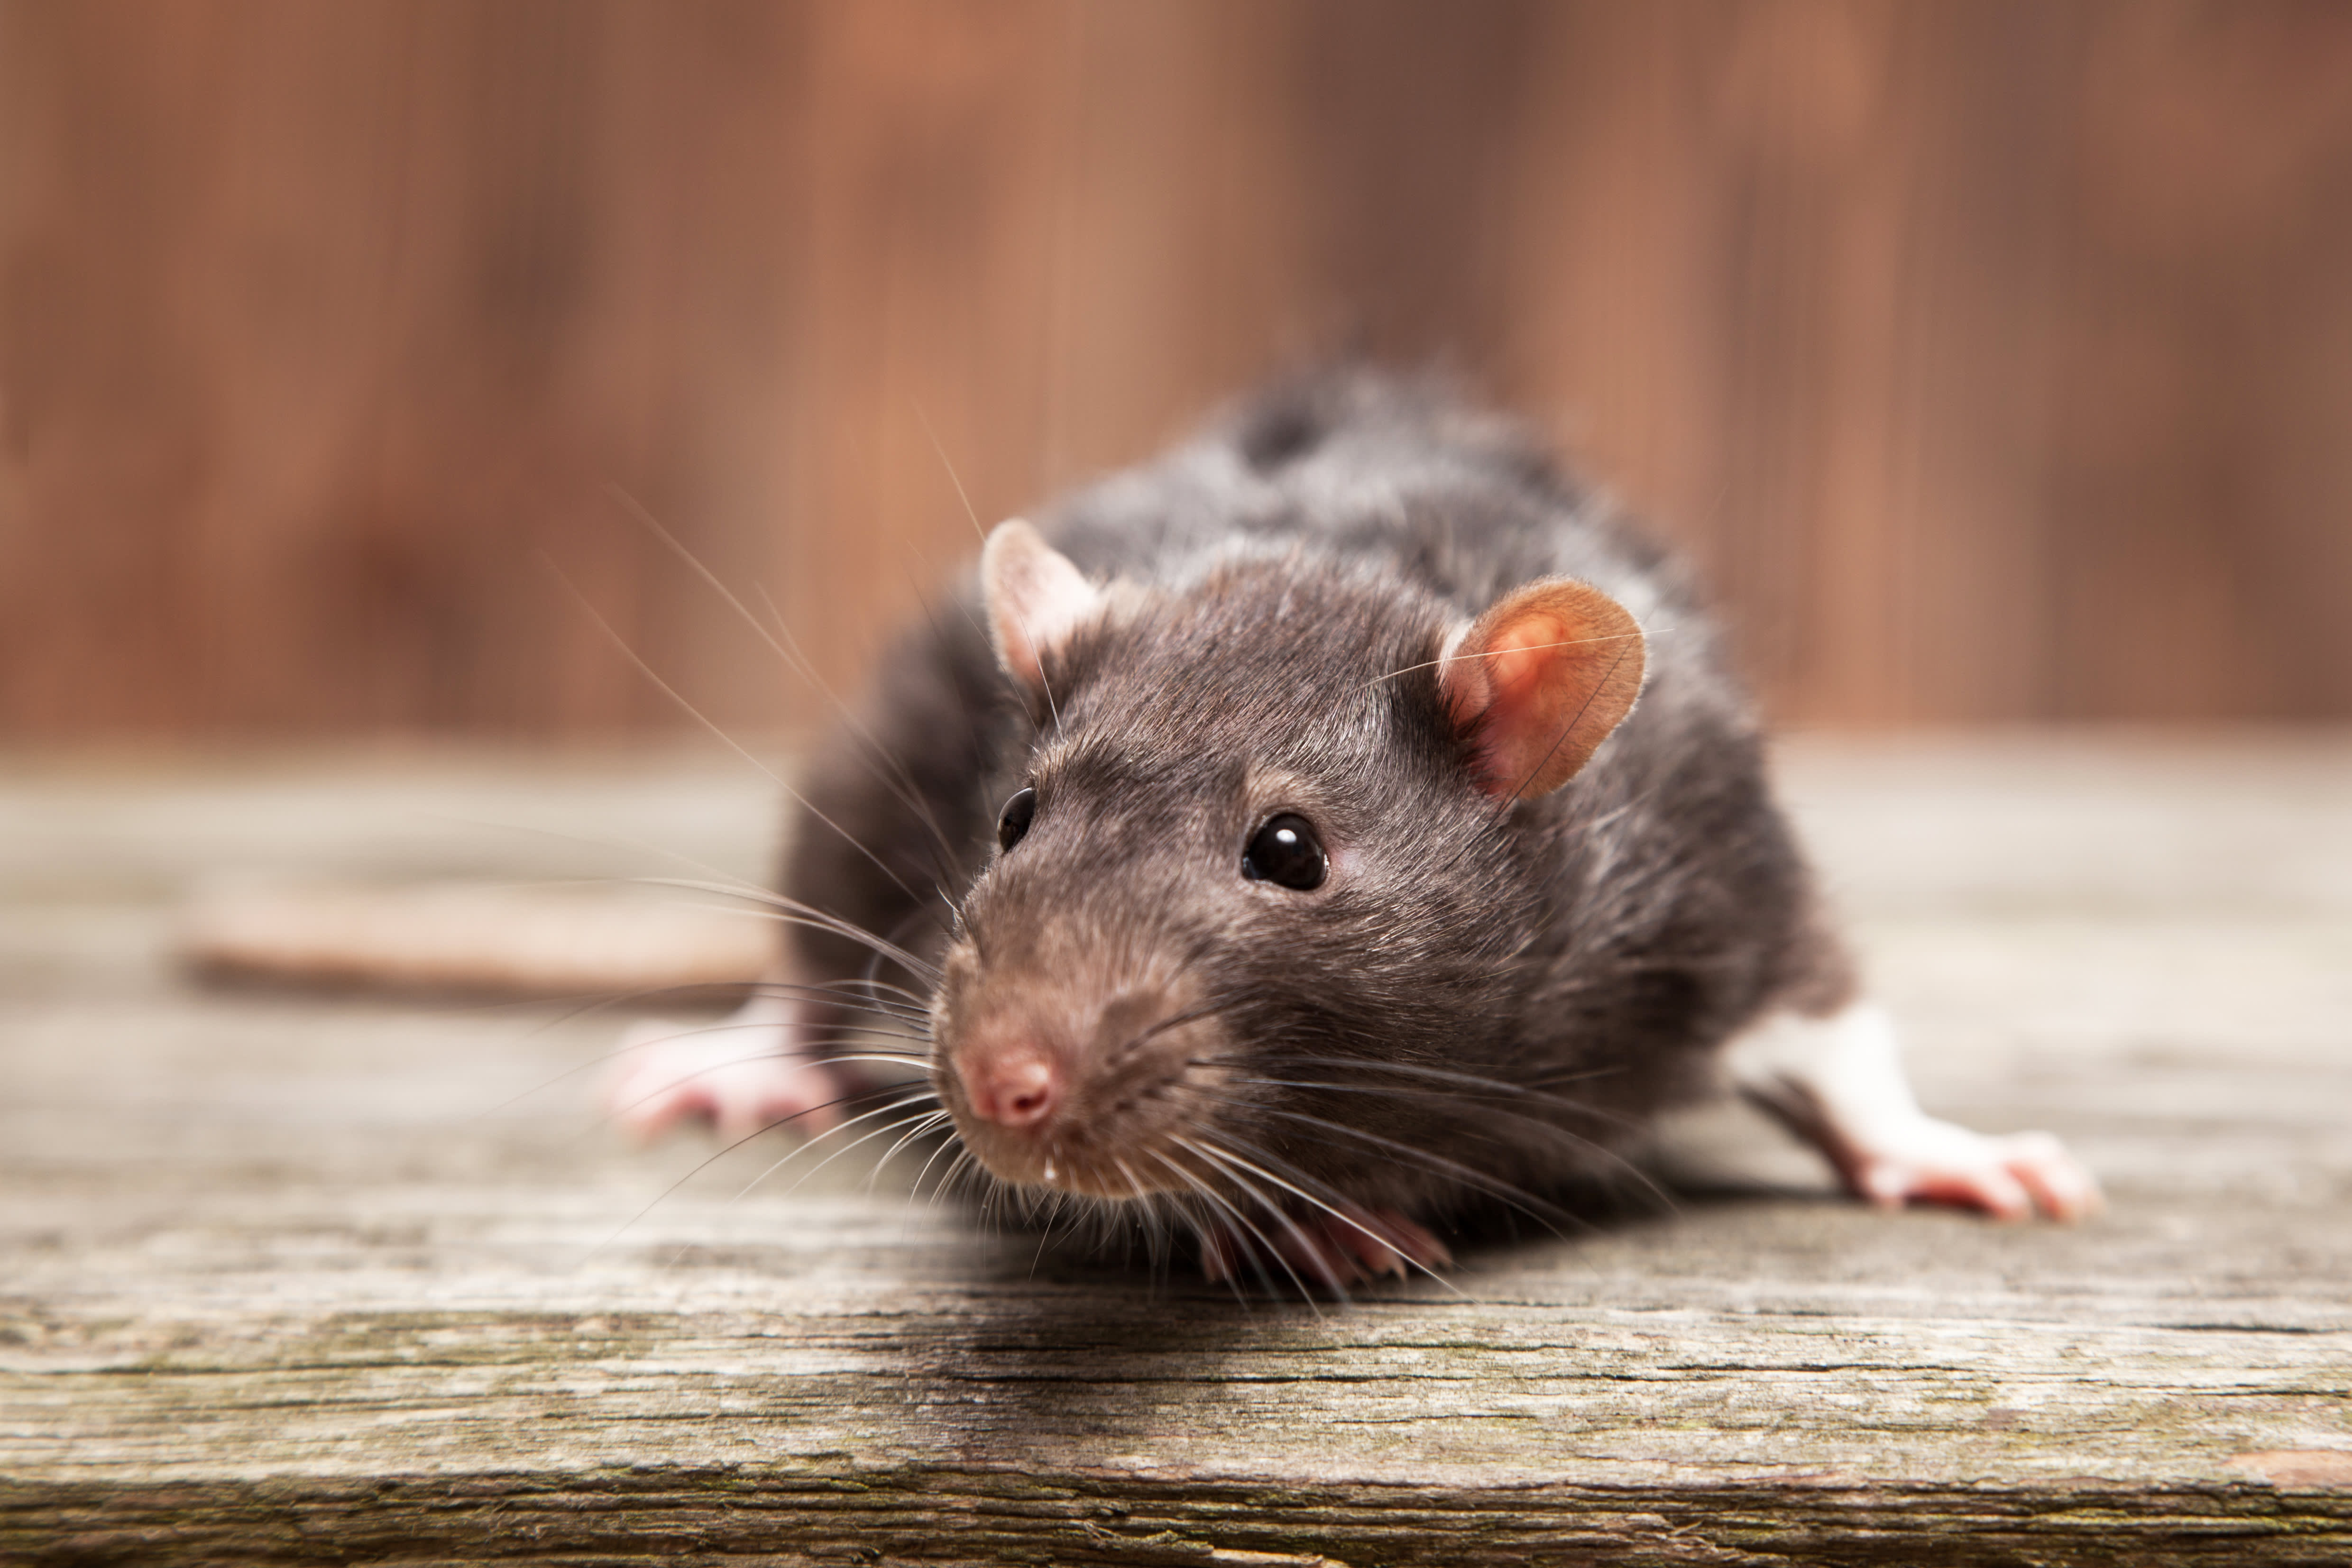 New York City Rat Population Is Hard to Measure